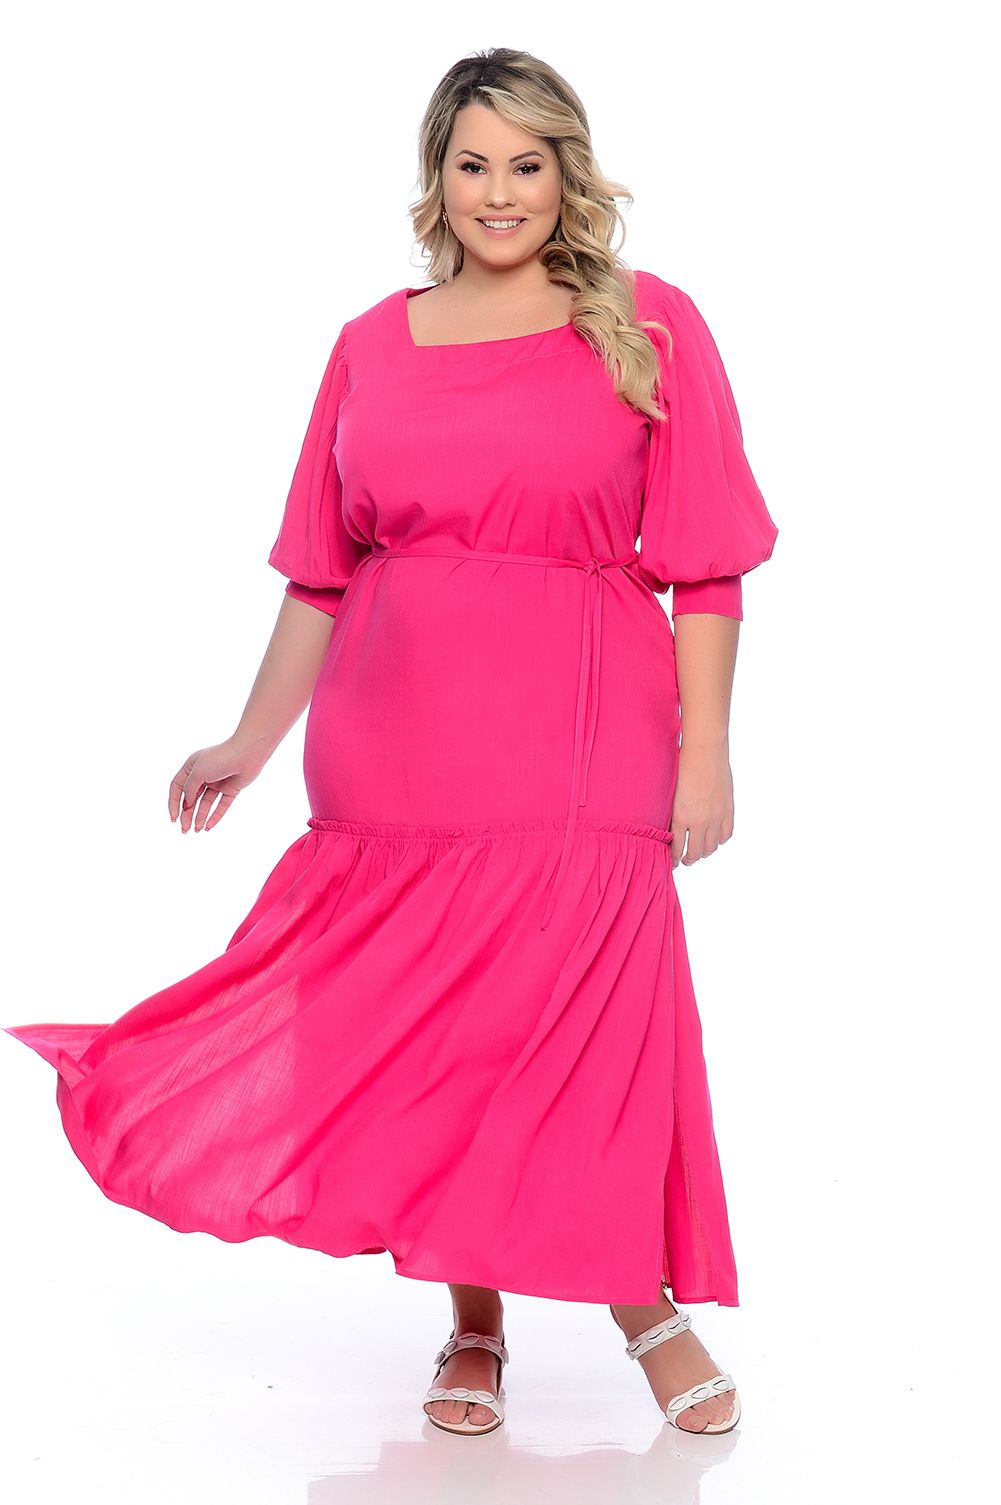 Vestido Plus Size Pink em Renda